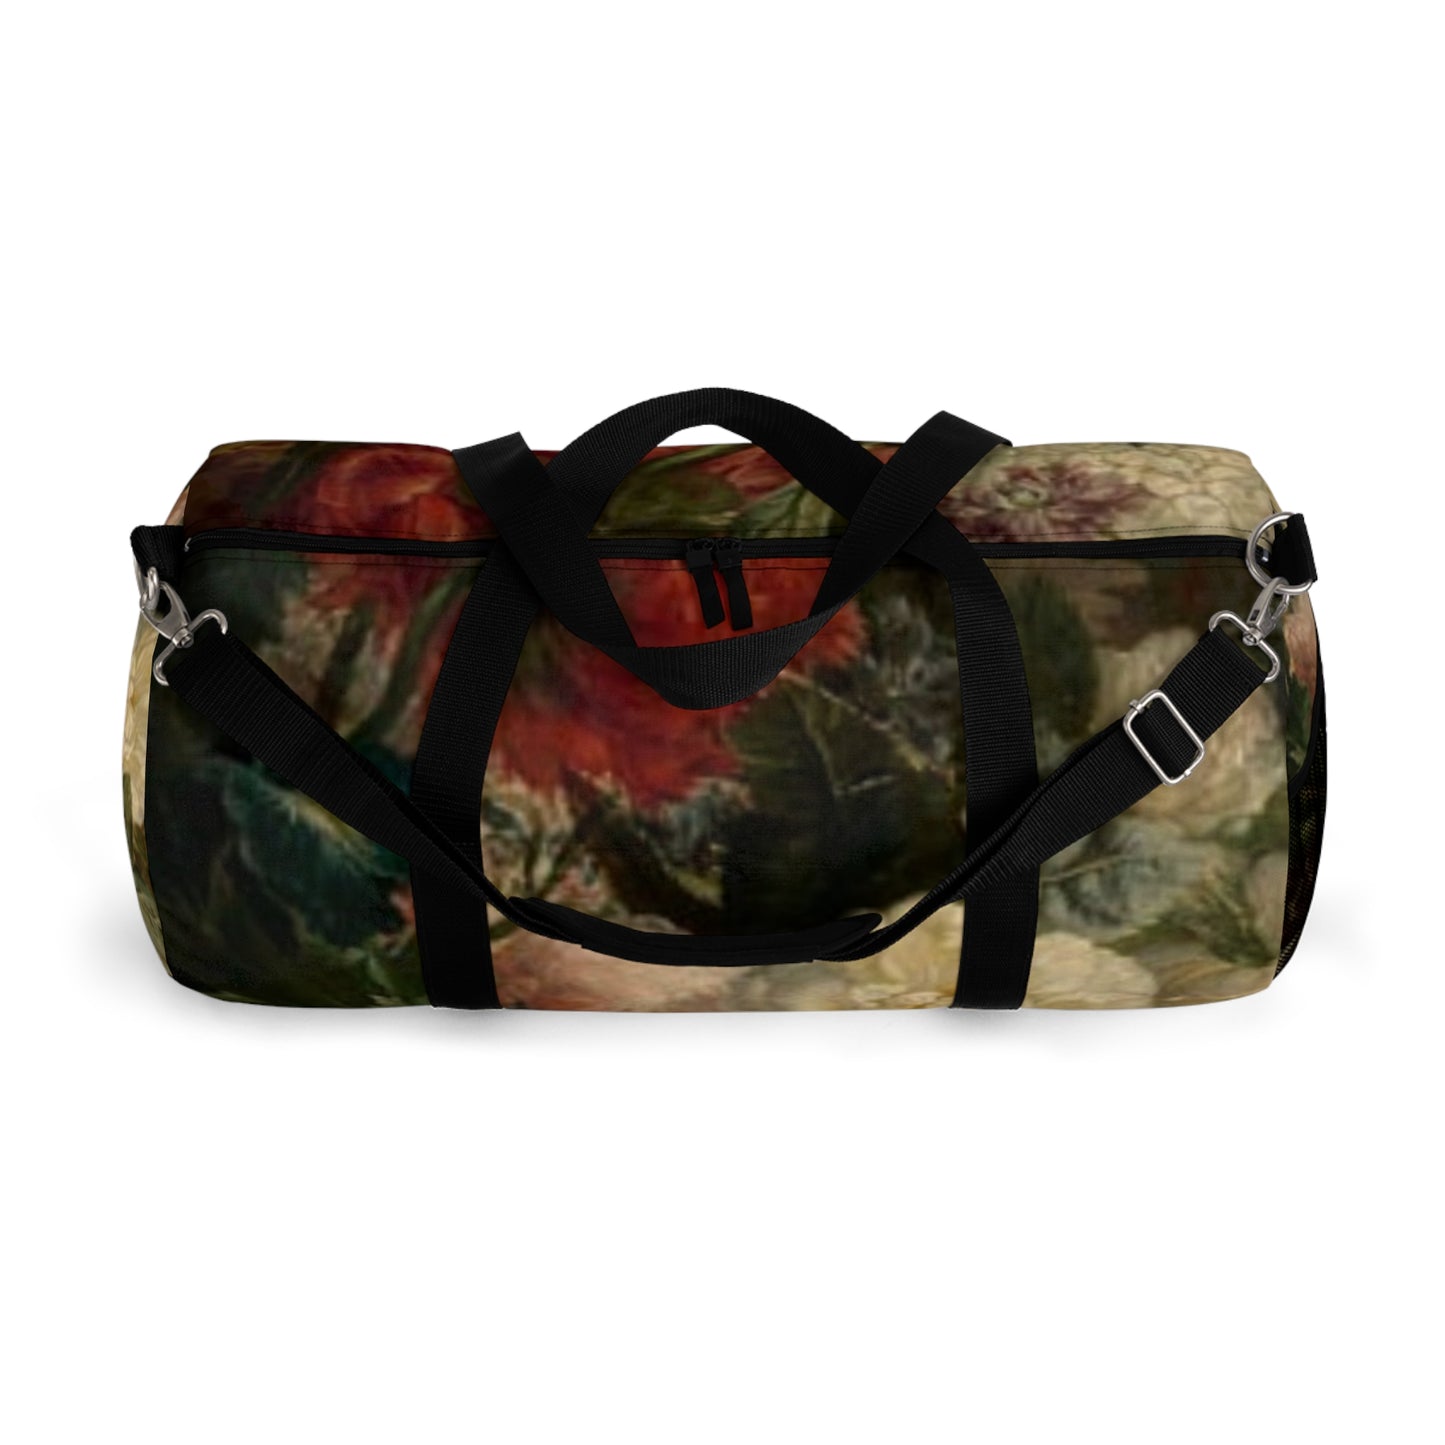 Flower Duffel Bag